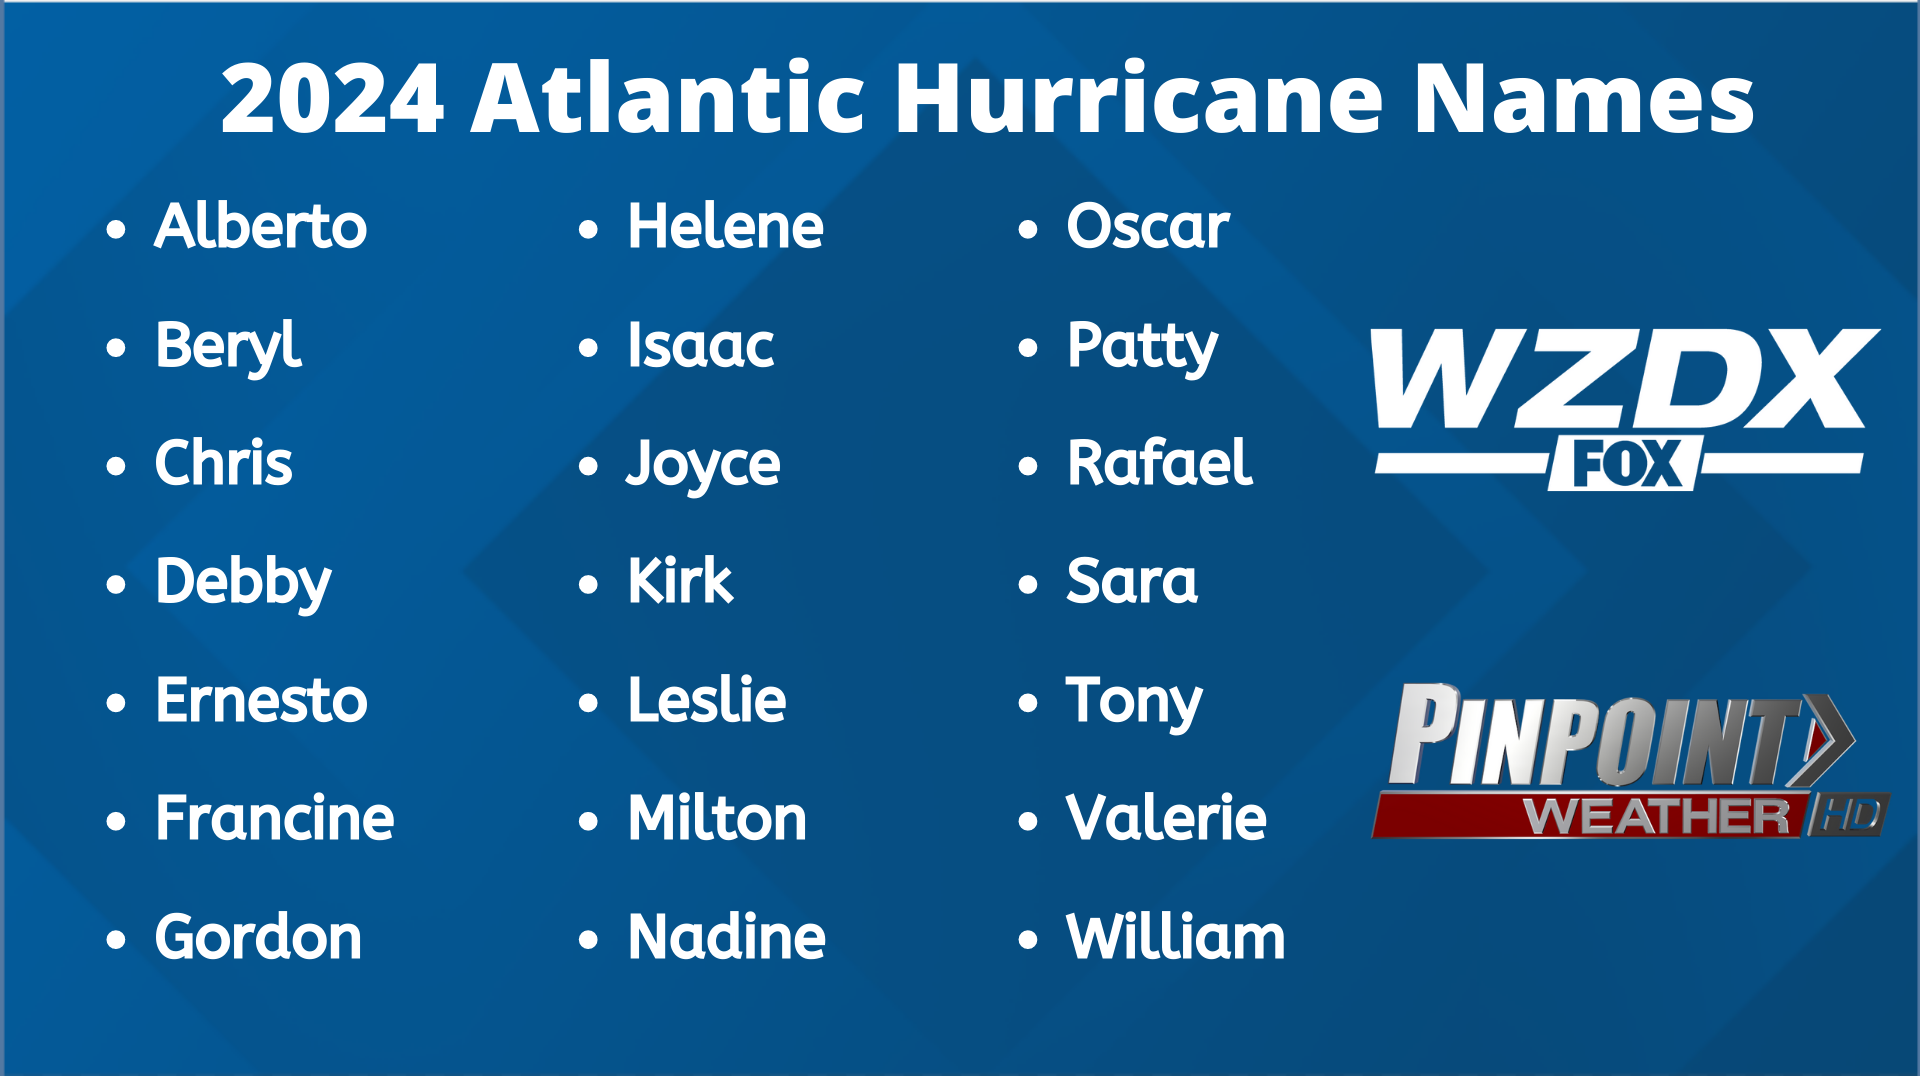 Atlantic Hurricane Names Through 2025